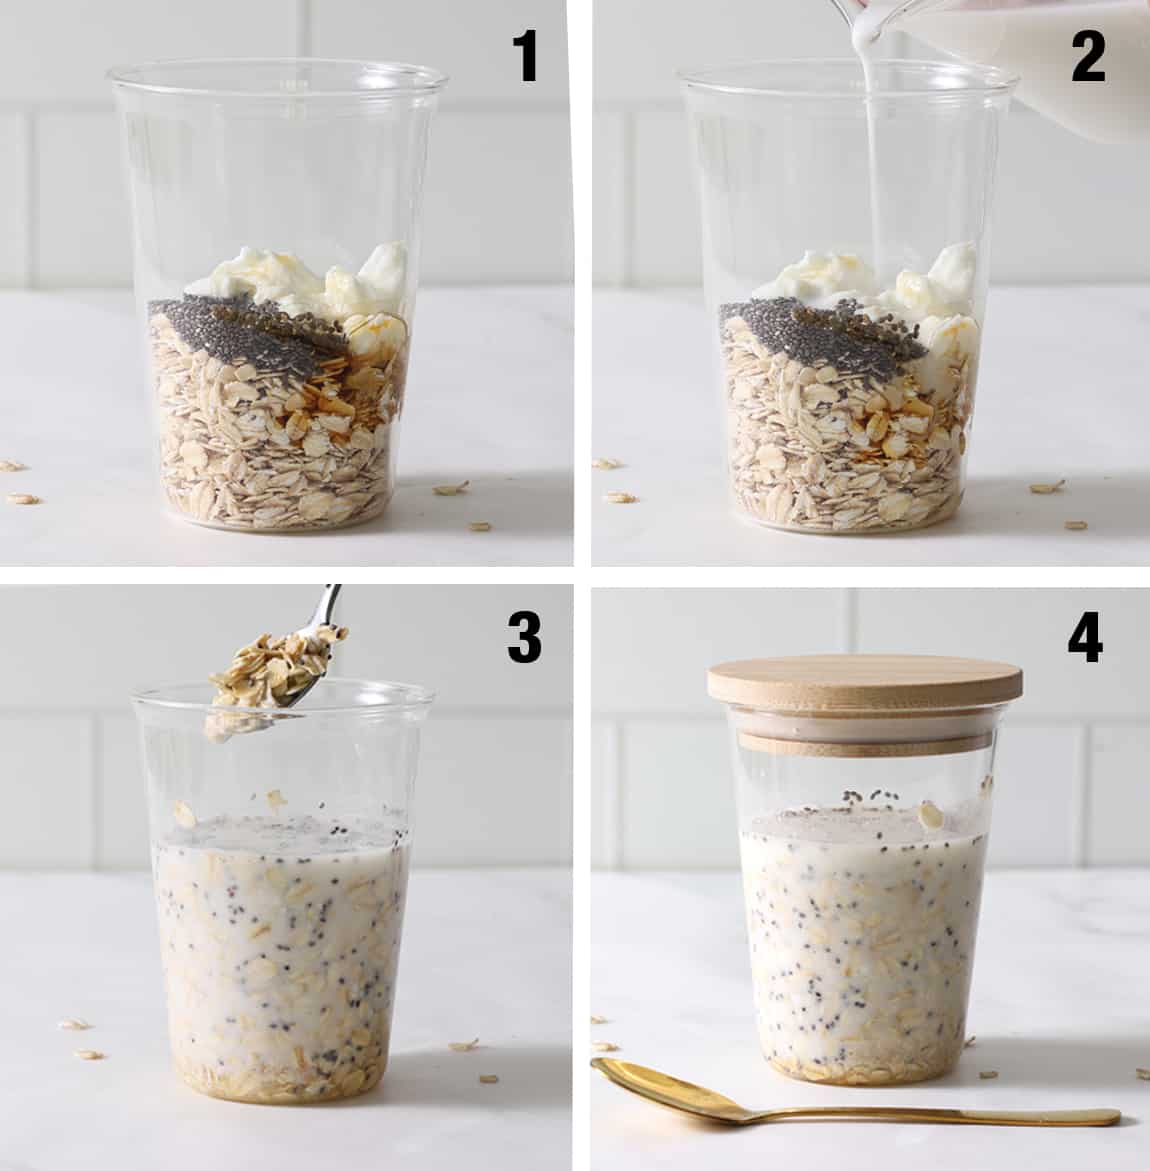 steps to make overnight breakfast oats